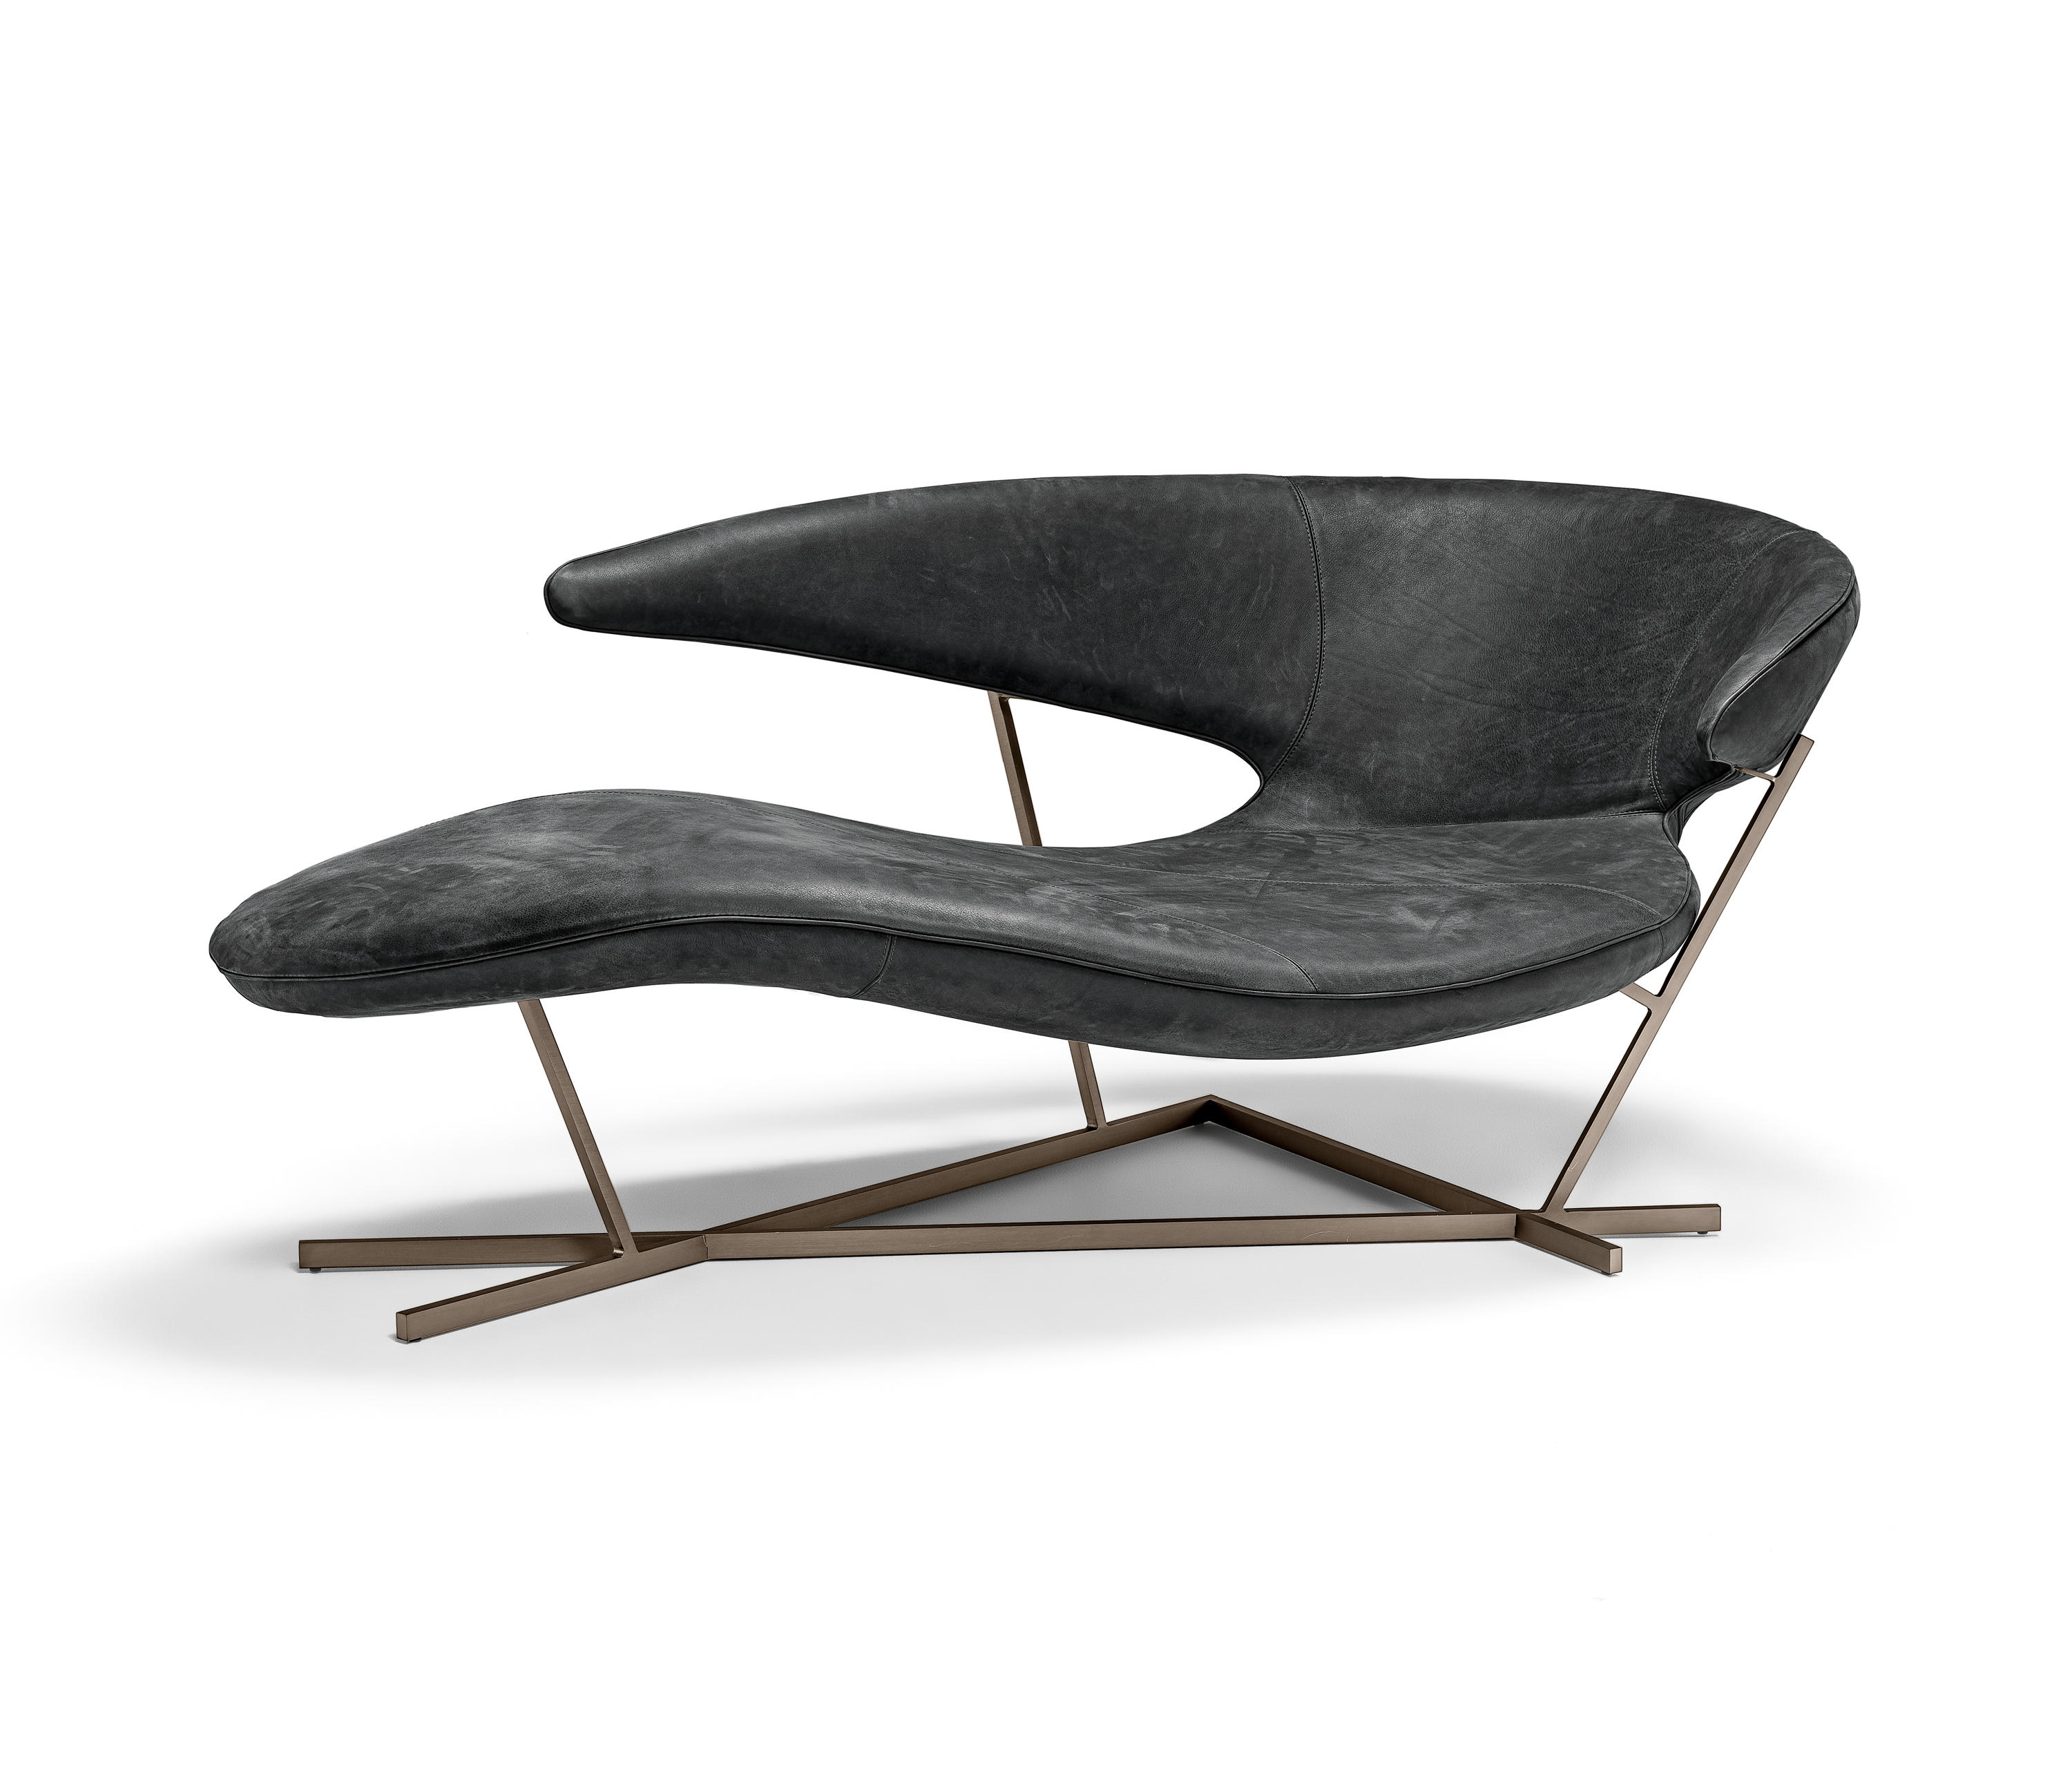 Design Heroes: Micarta Chair by Marc Newson - Sohomod Blog